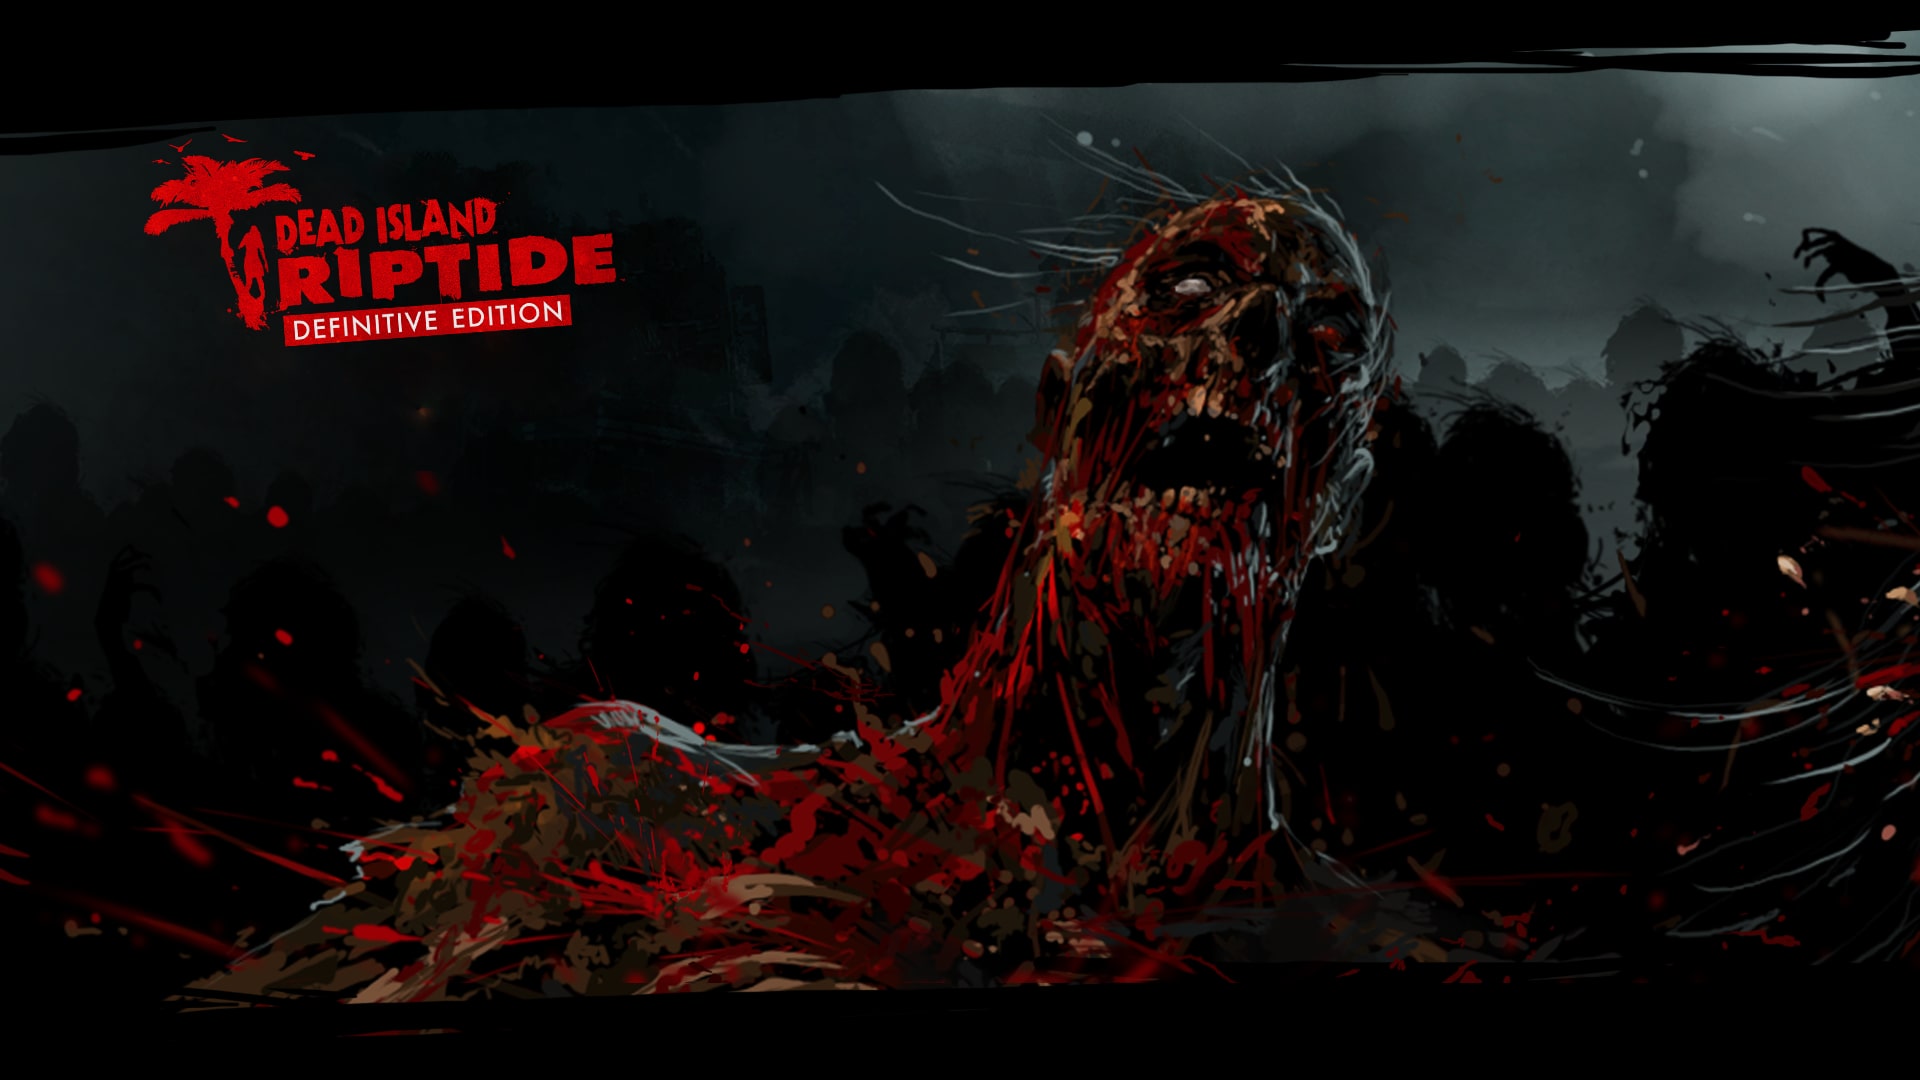 Dead Island Riptide Definitive Edition Steam Global - TakGaming